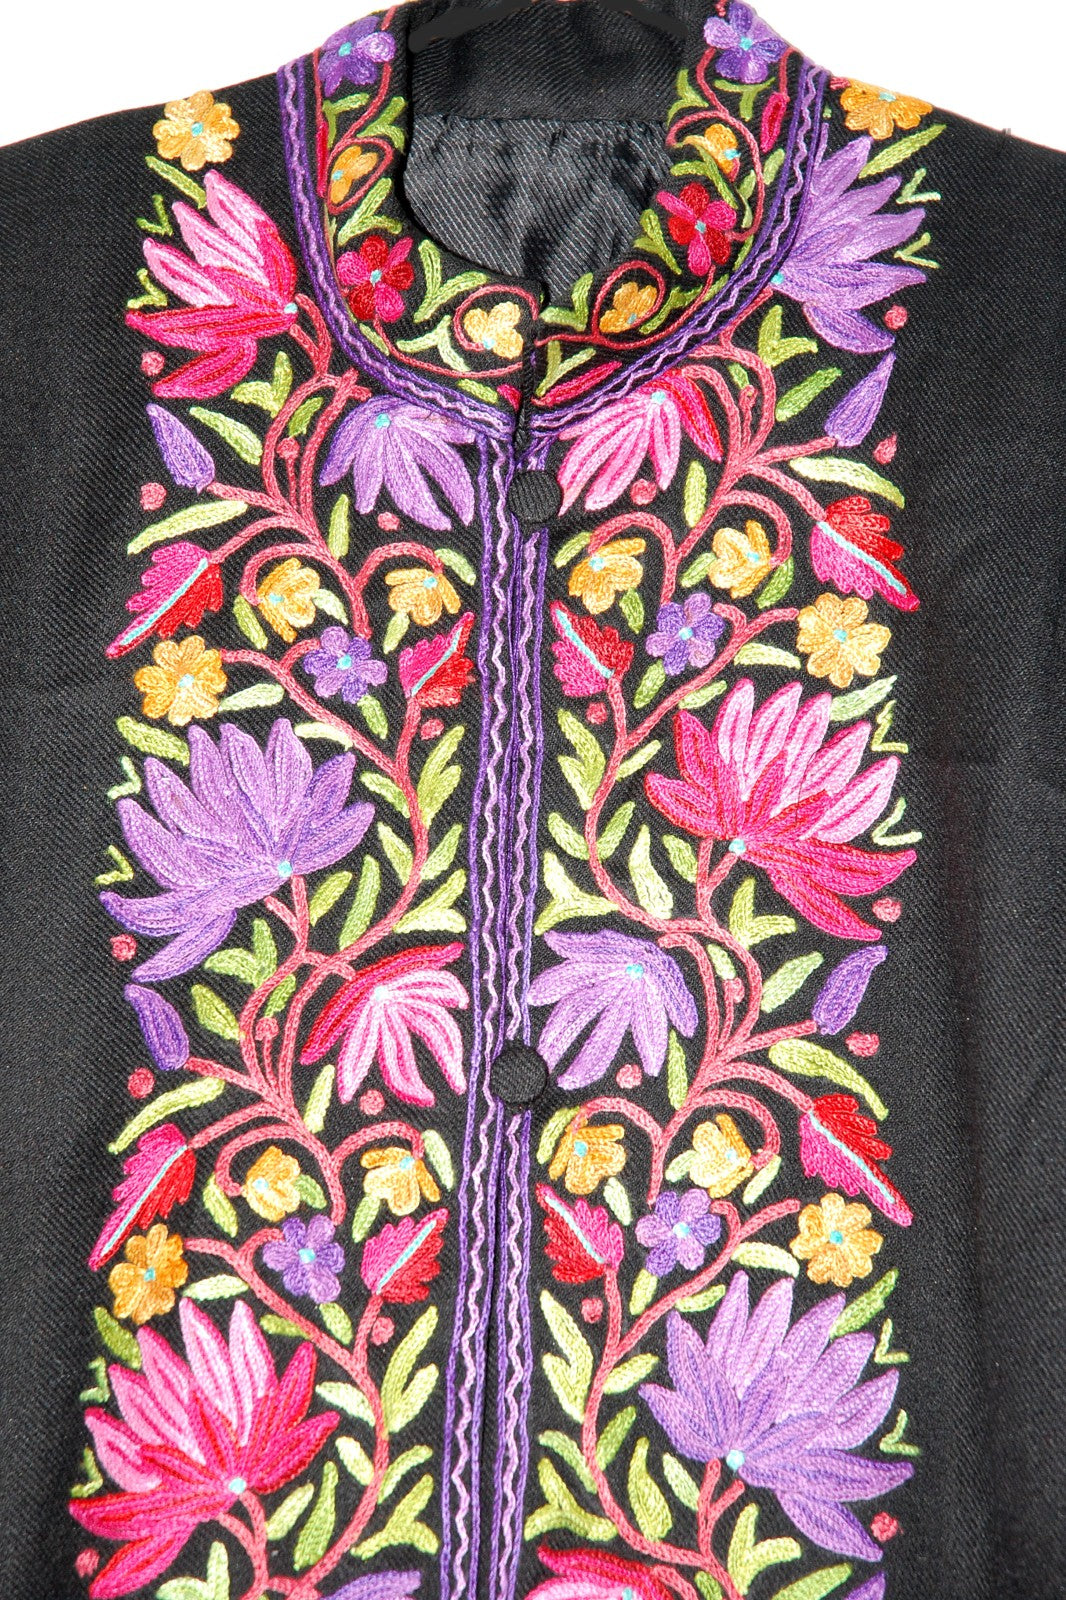 Woolen Coat Long Jacket Black, Multicolor Embroidery #BD-115